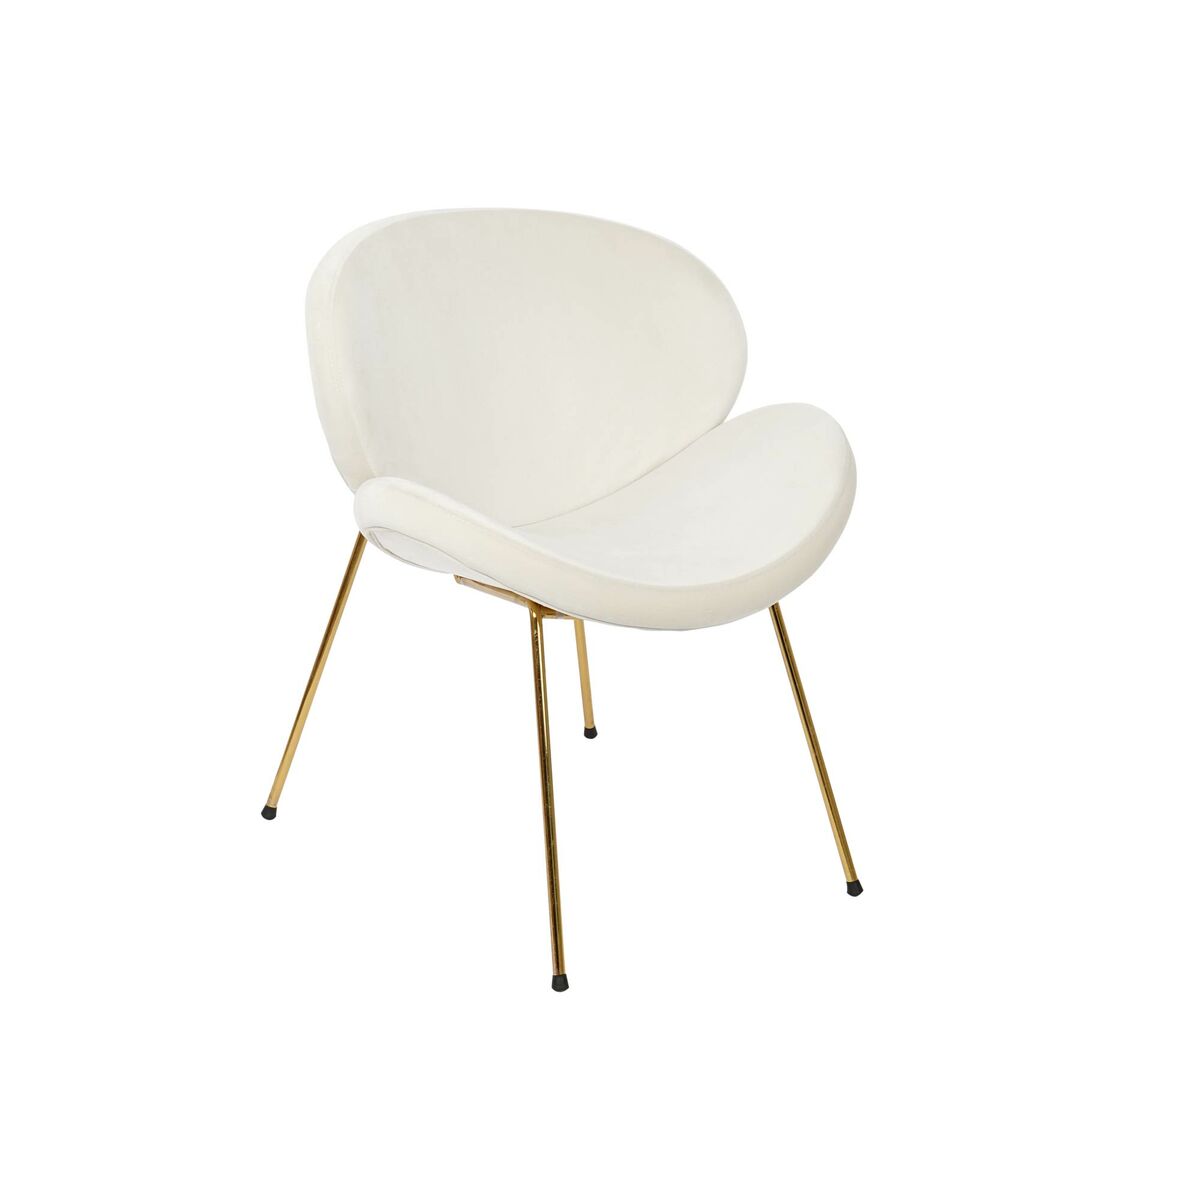 Foam White Chair with Golden Metal Legs (63 x 57 x 73 cm)